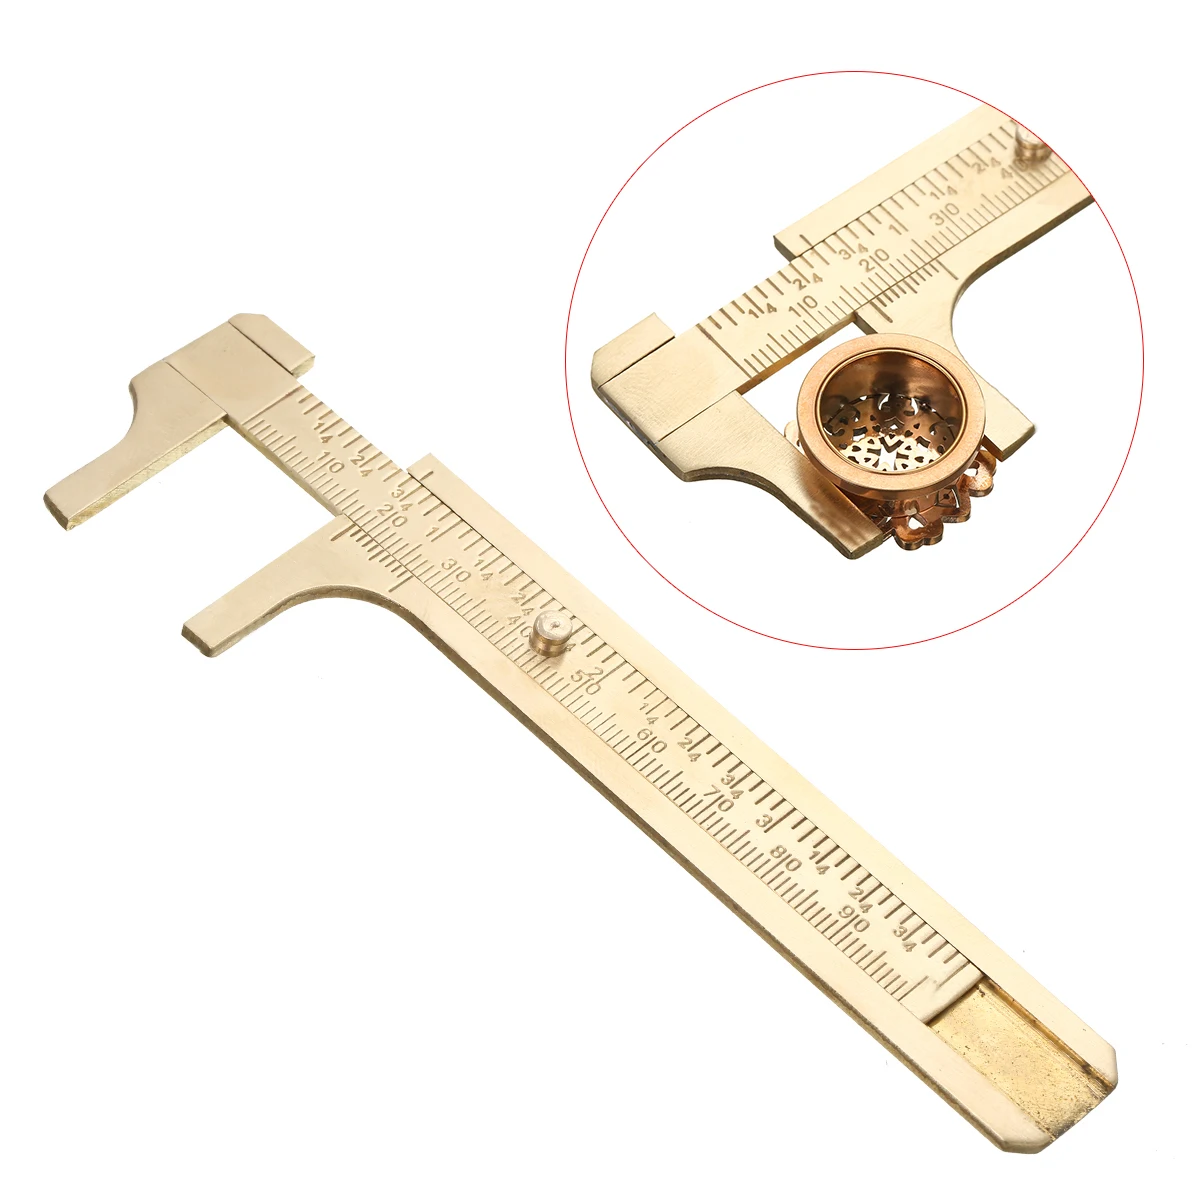 Silverline Solid Brass Measuring Gauge Vernier Calipers Jewellers Craft 100mm 4" 